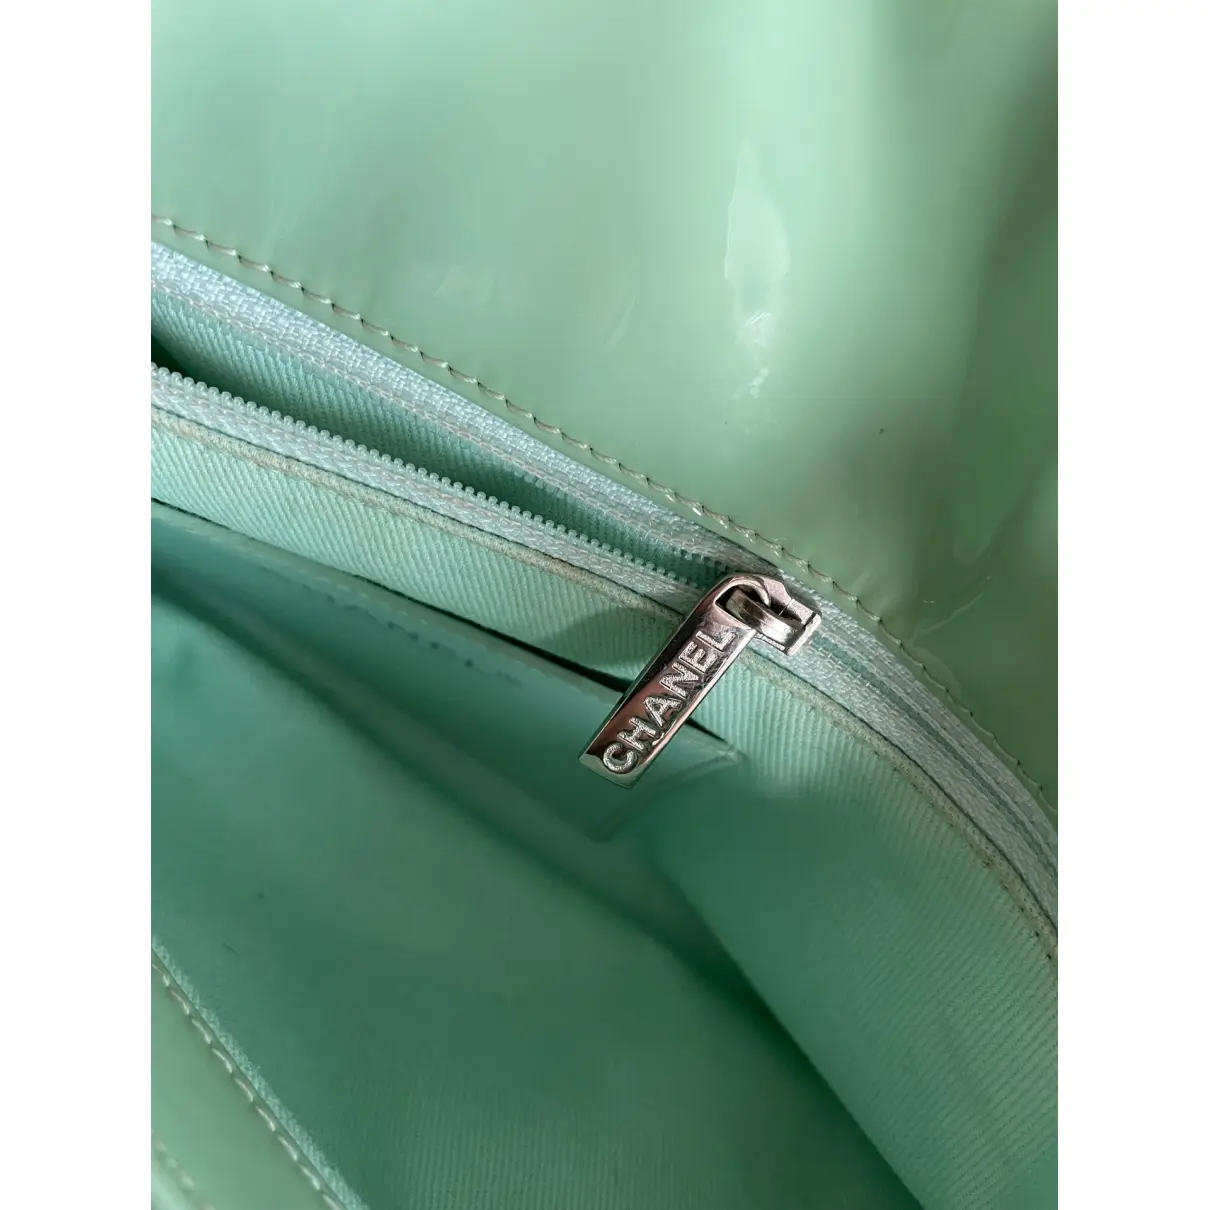 Mademoiselle patent leather handbag Chanel